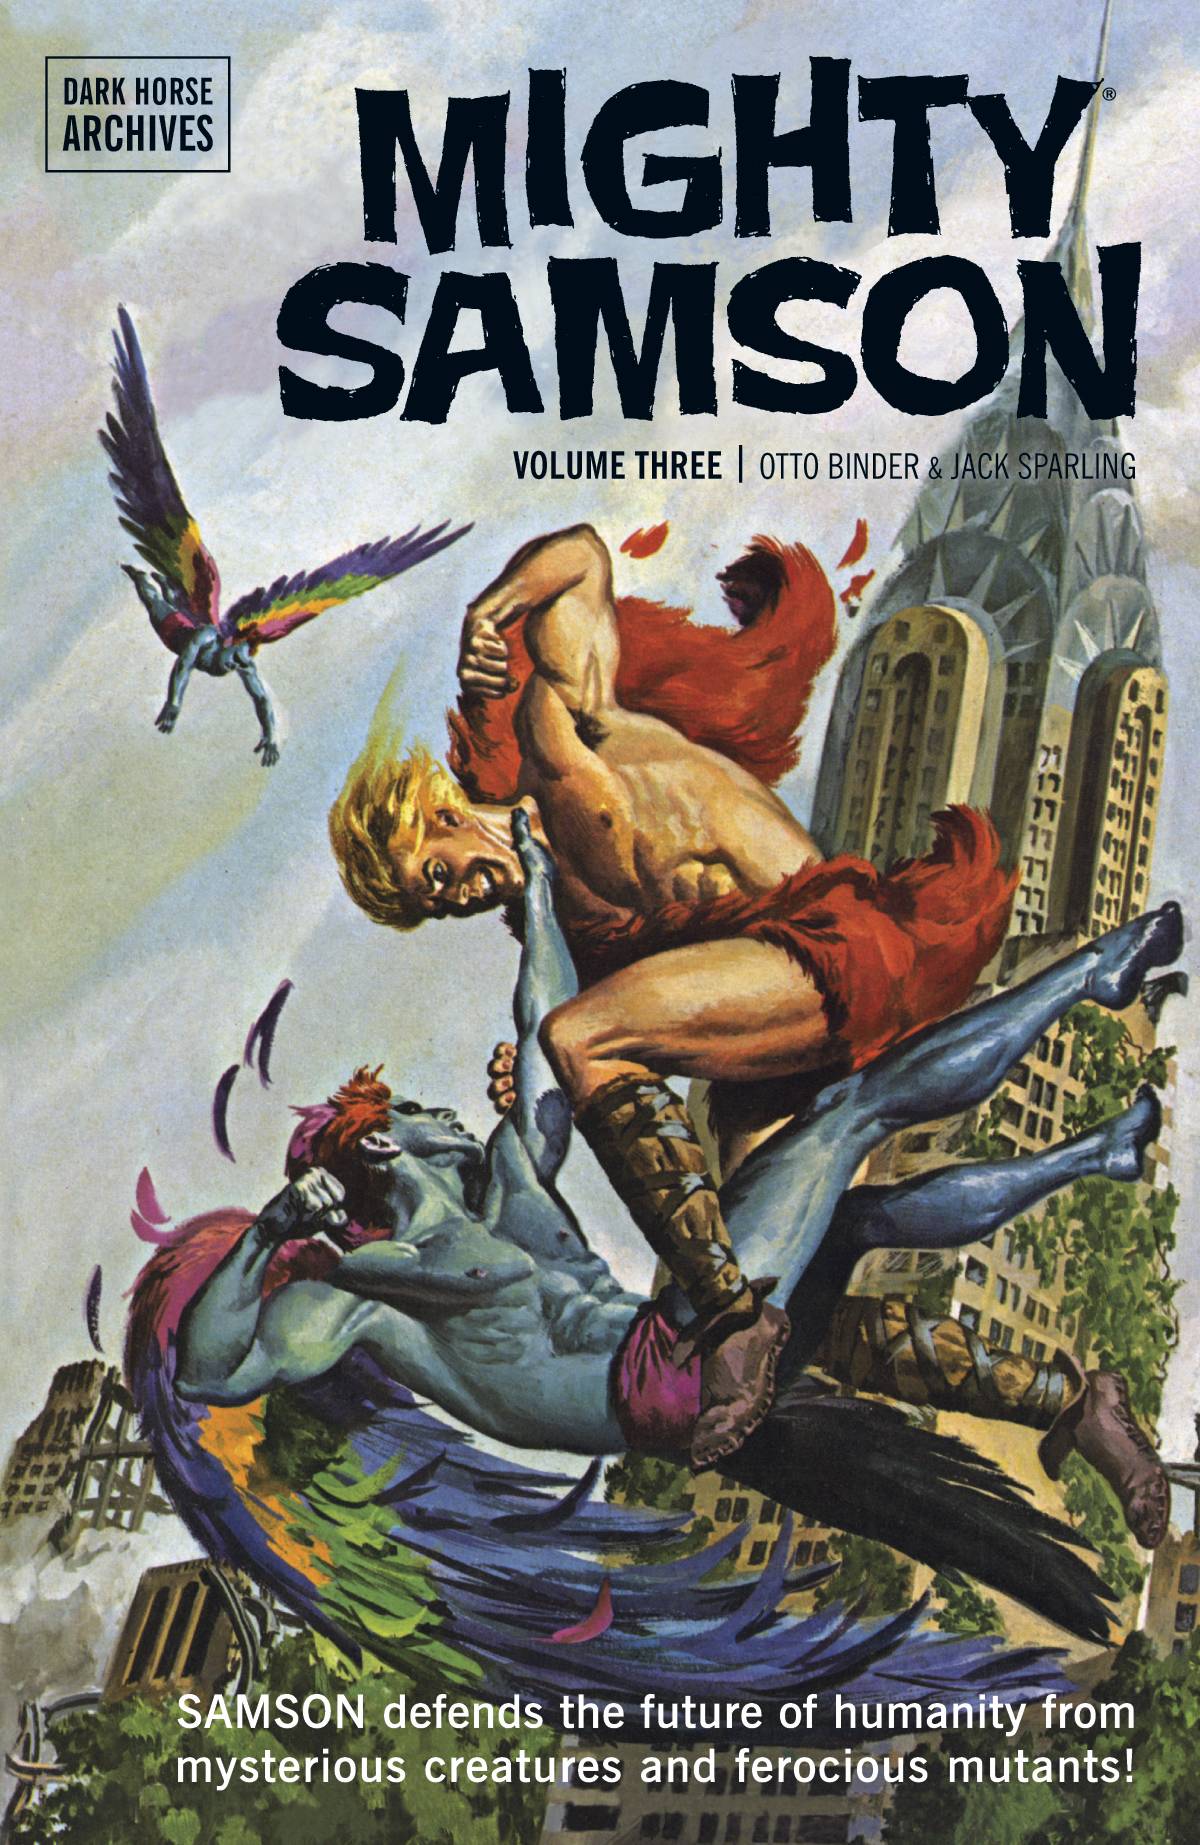 Samson the mighty